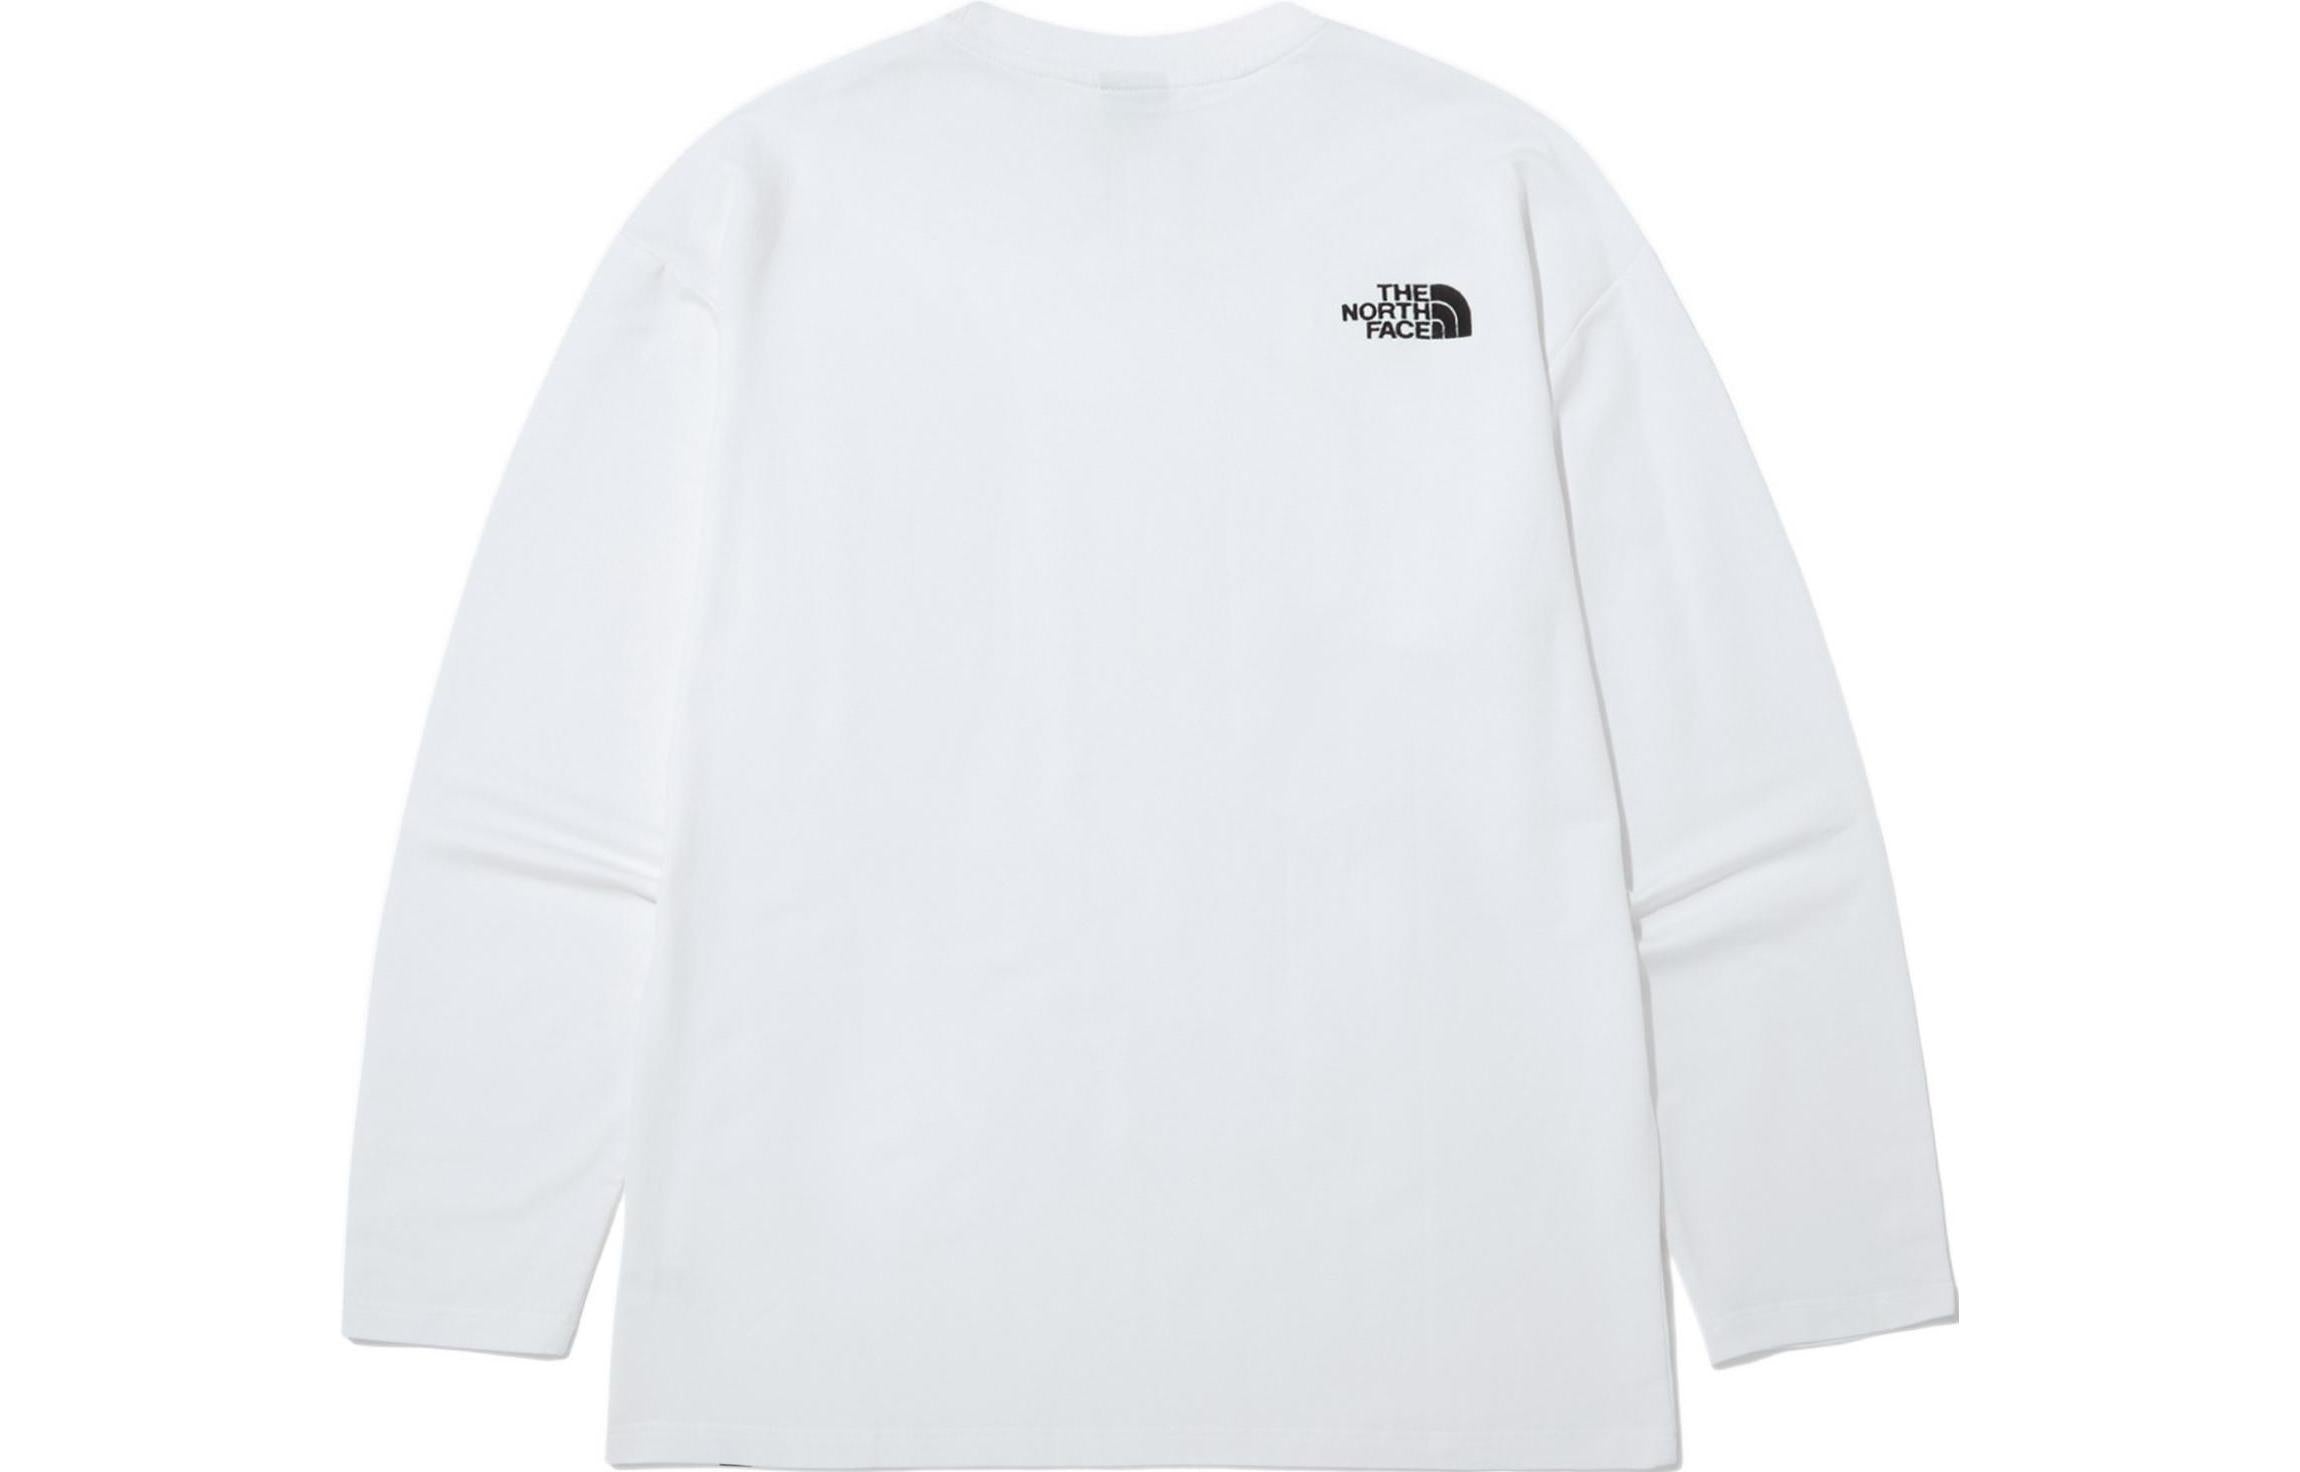 THE NORTH FACE Long Sleeve T-Shirt 'White' NT7TN90B - 3